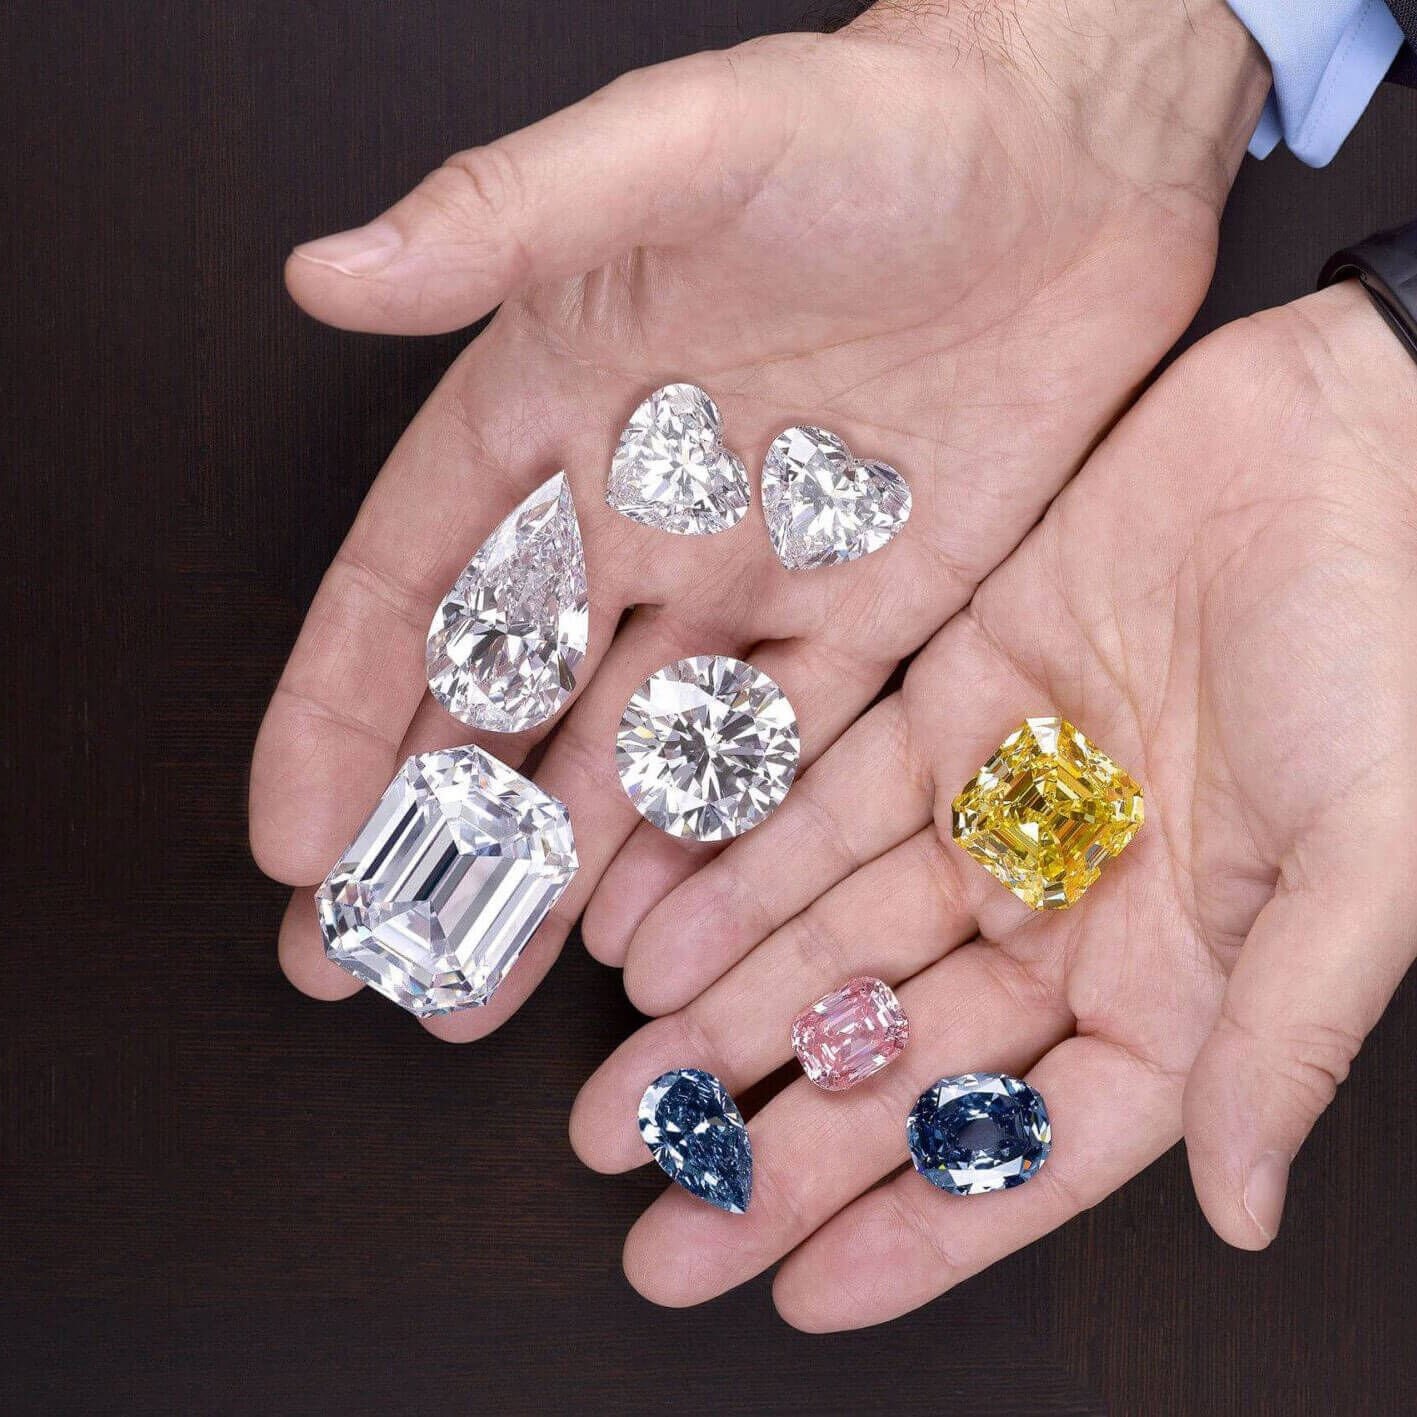 تشخیص اصل یا تقلبی بودن الماس "Diamonds"